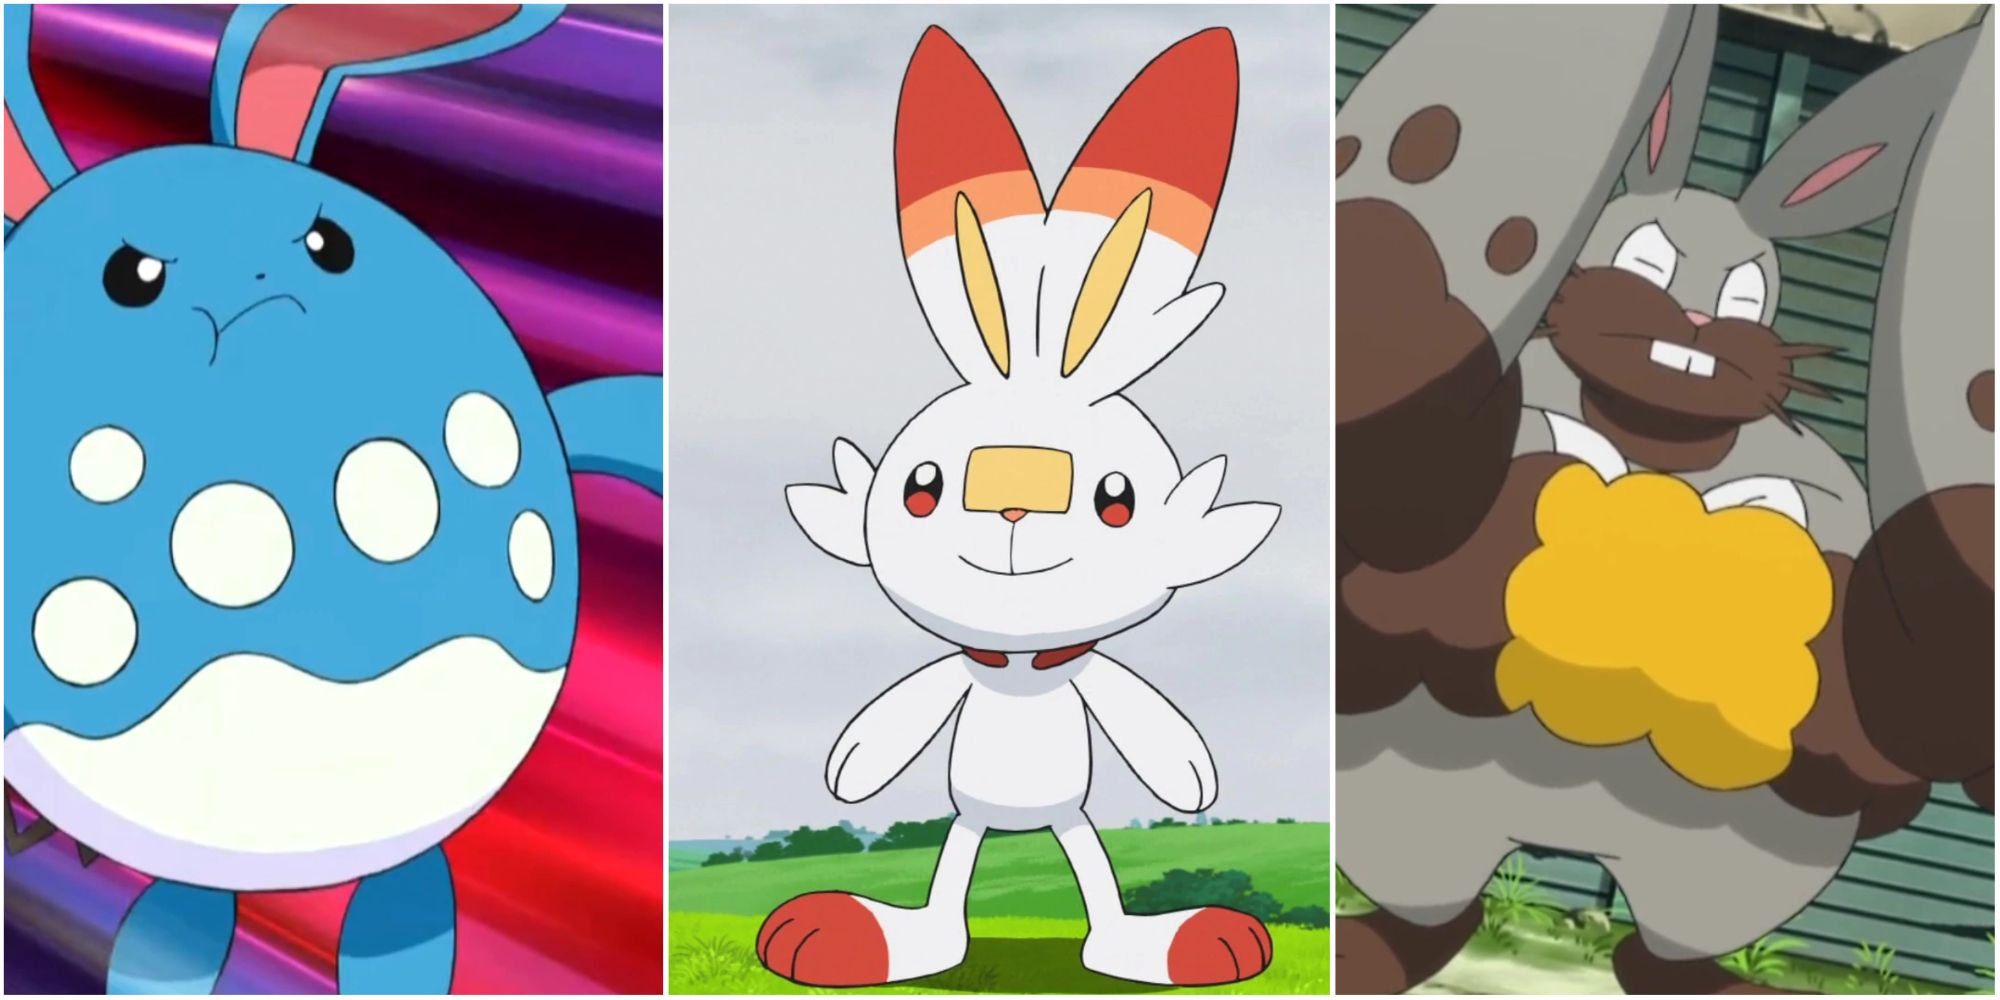 The best bunny Pokémon